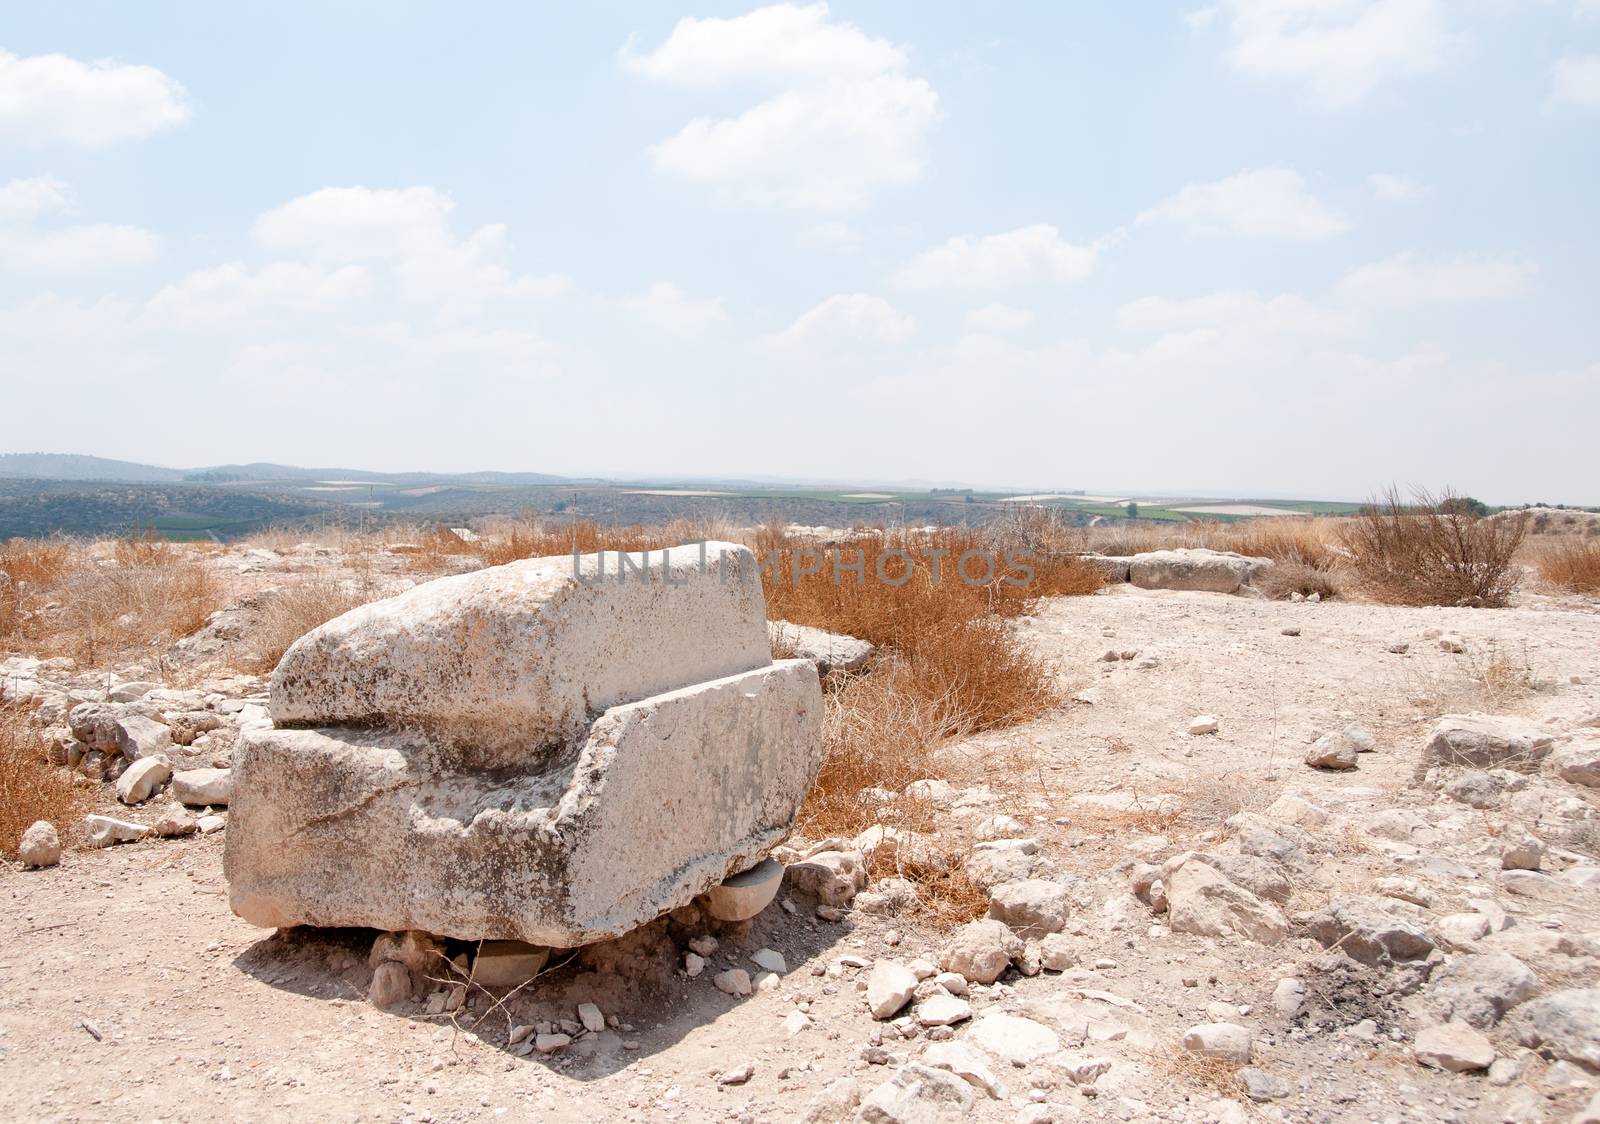 Archaeology excavations in Israel by javax